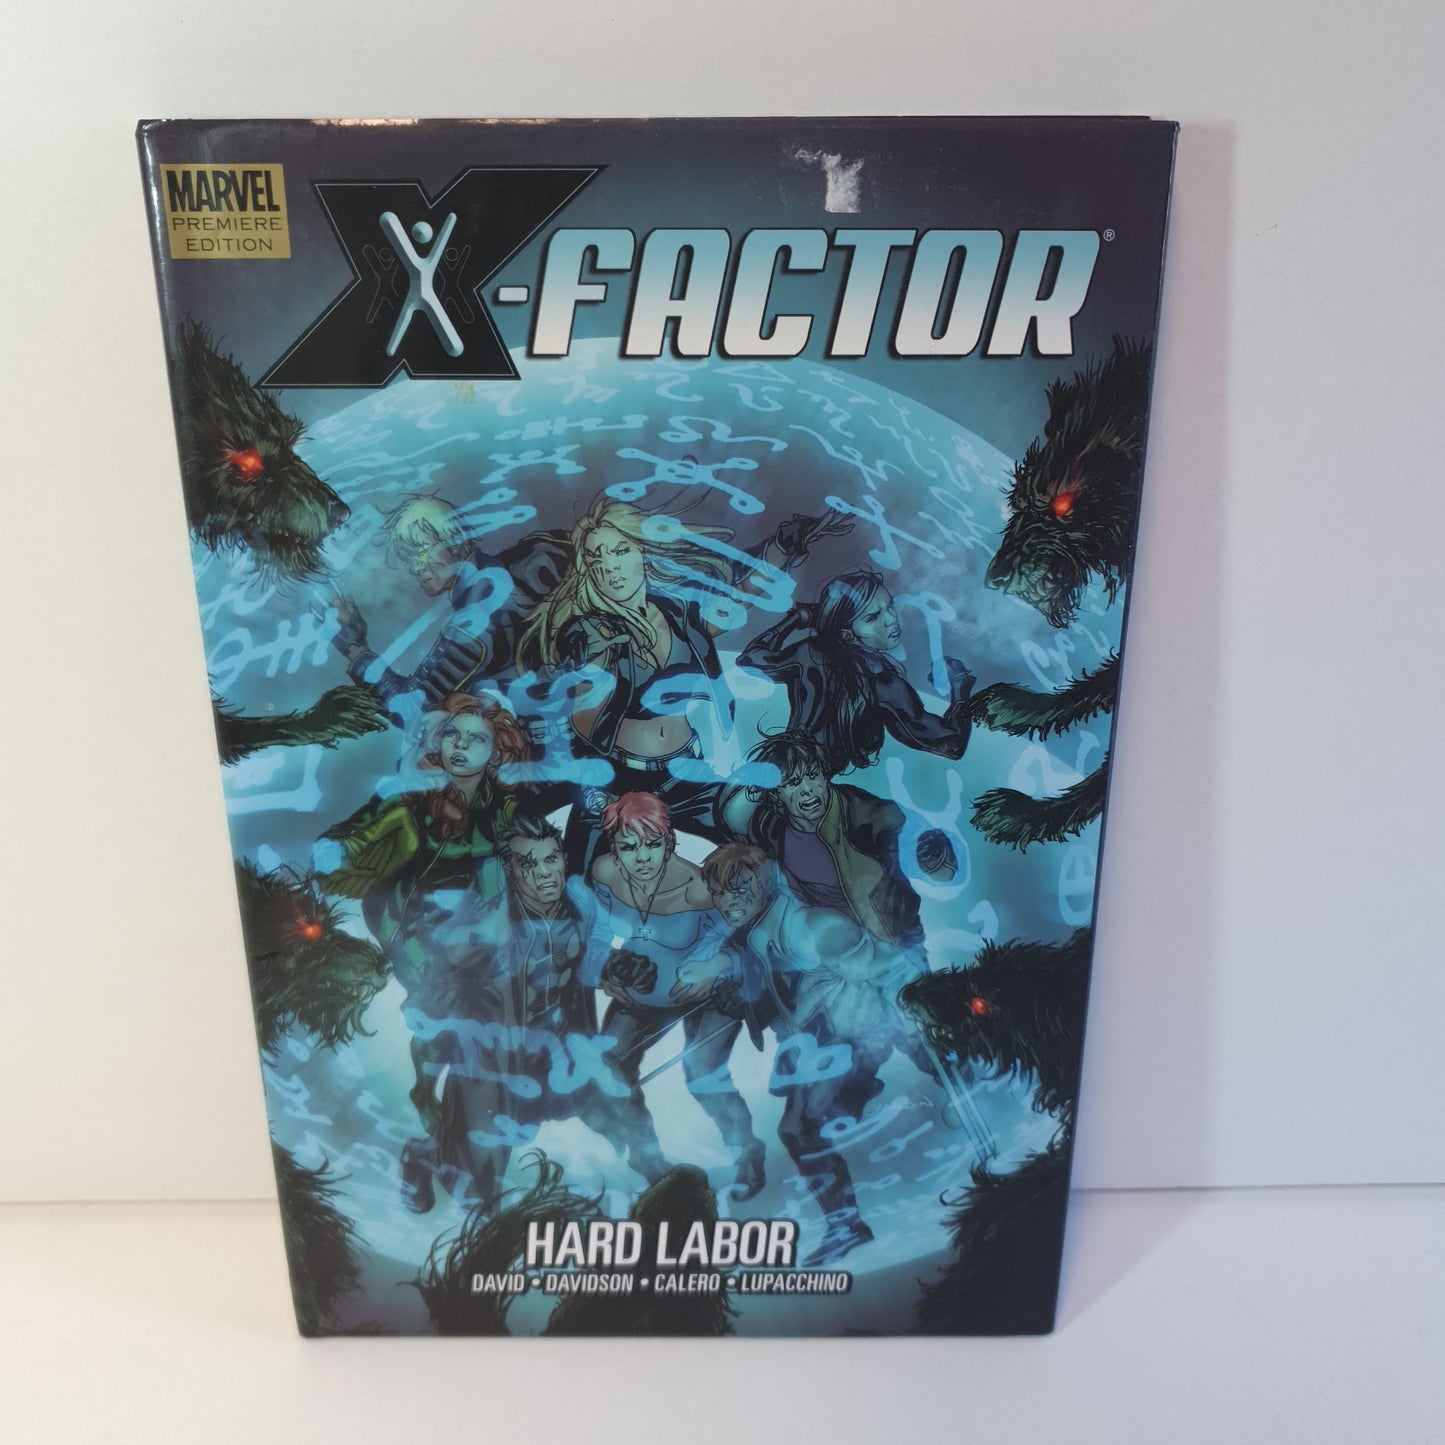 X-Factor: Hard Labor by David, Davidson, Calero & Lupacchino (2011)